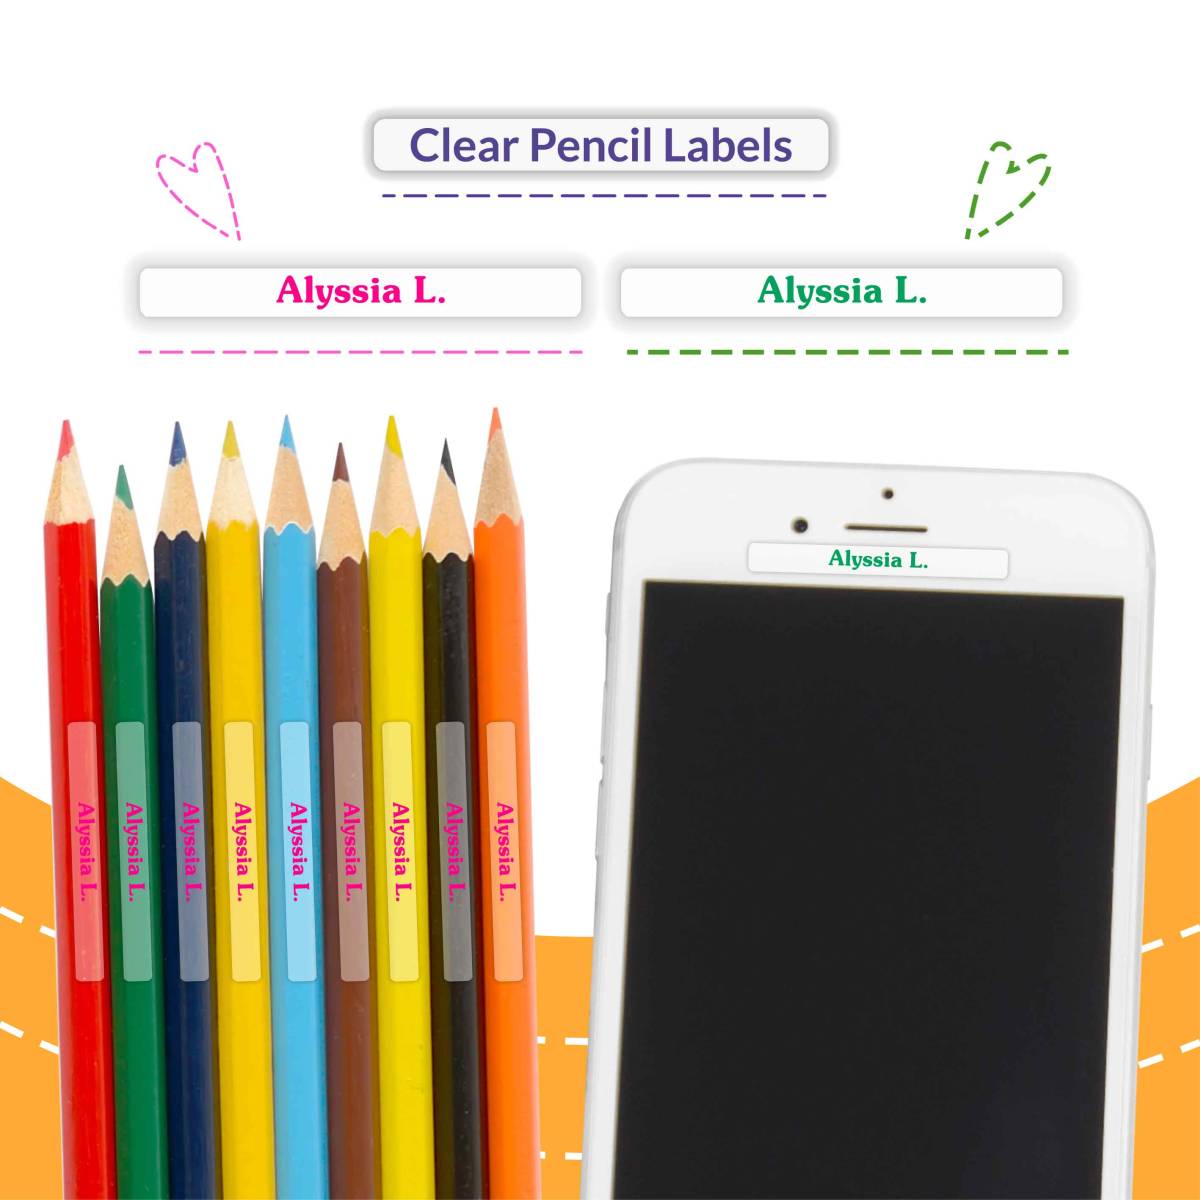 Clear Pencil Labels